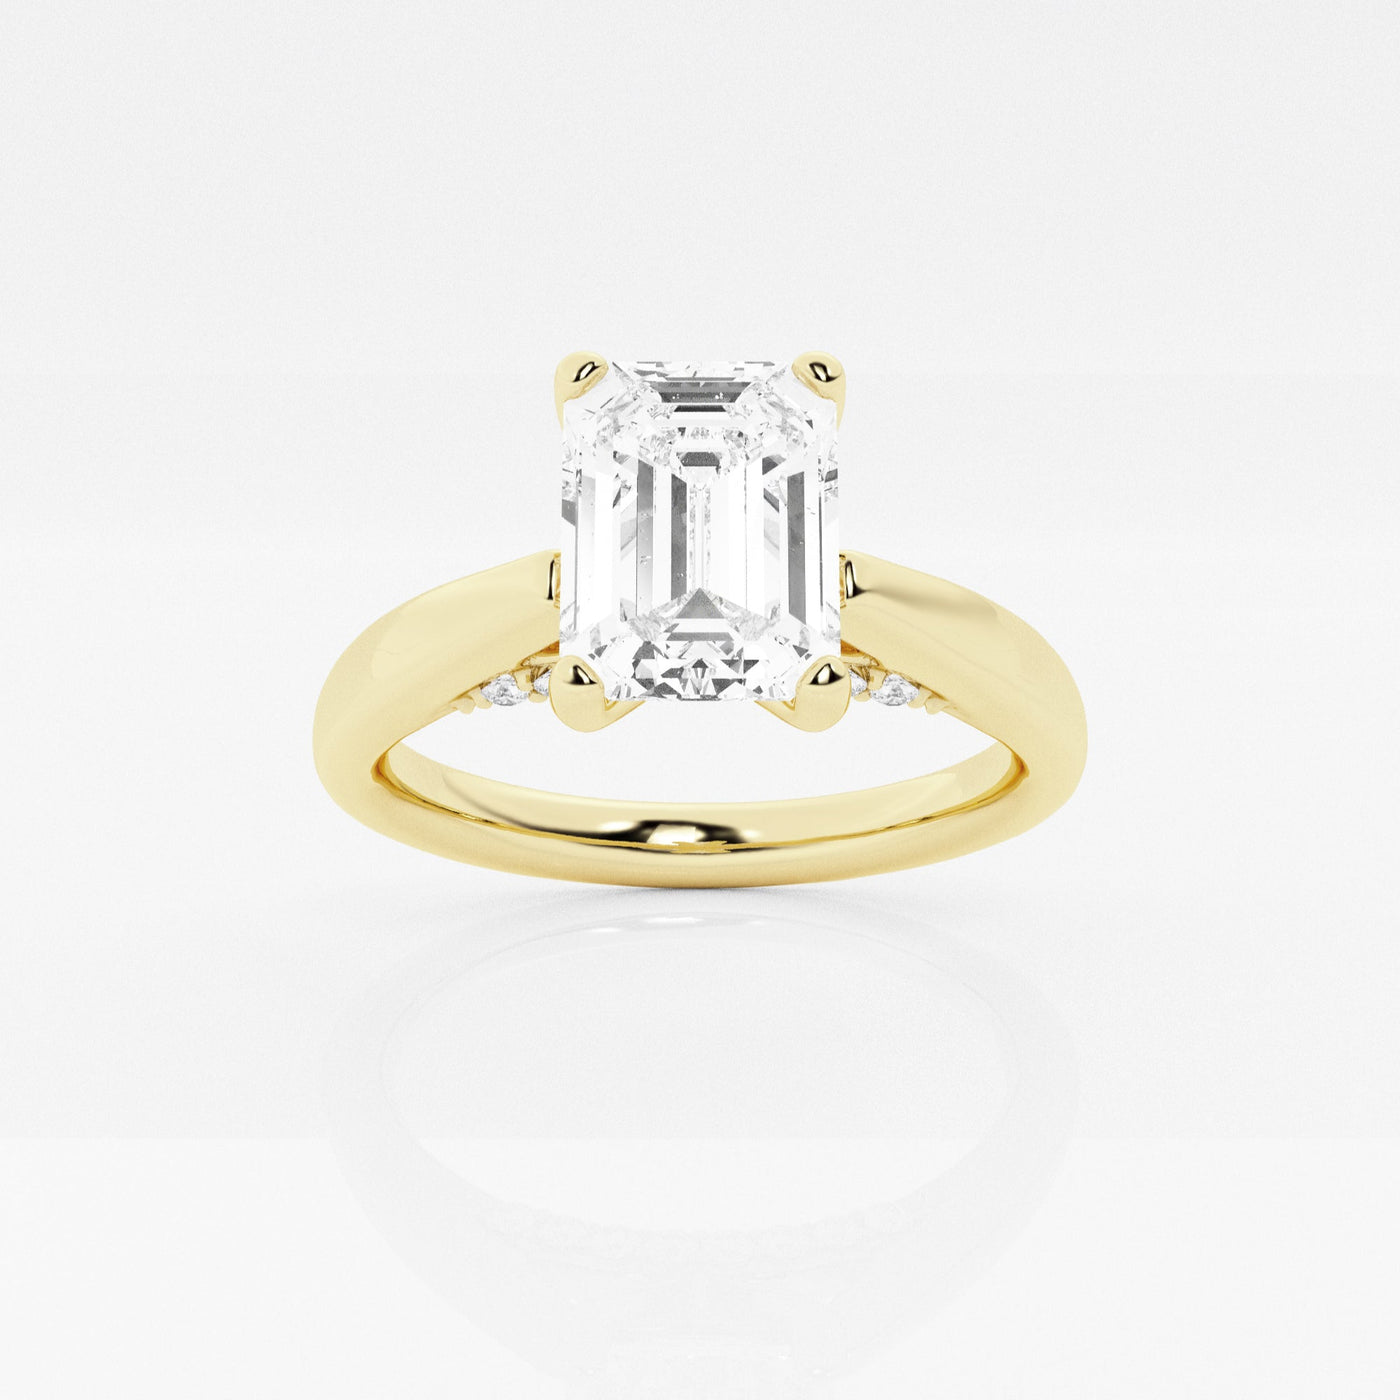 _main_image@SKU:LGR0647X2E100SOGY4~#carat_1.14#diamond-quality_fg,-vs2+#metal_18k-yellow-gold